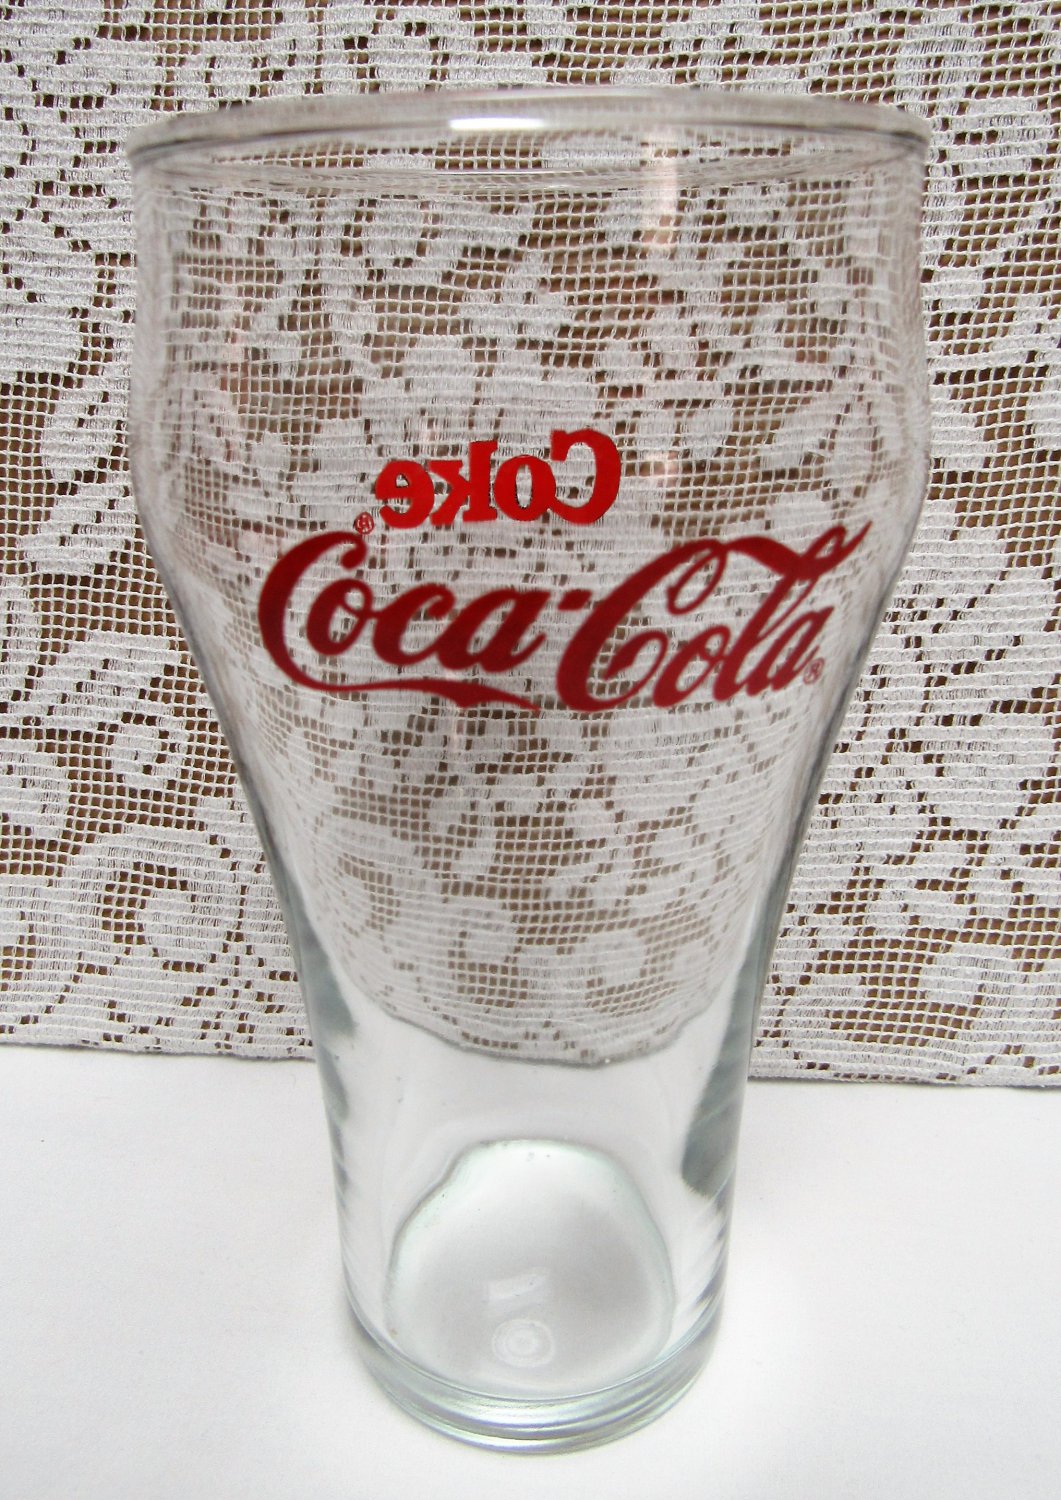 Coca-cola Glass Set, Vintage 16 Oz Soda Fountain Drinking Glasses